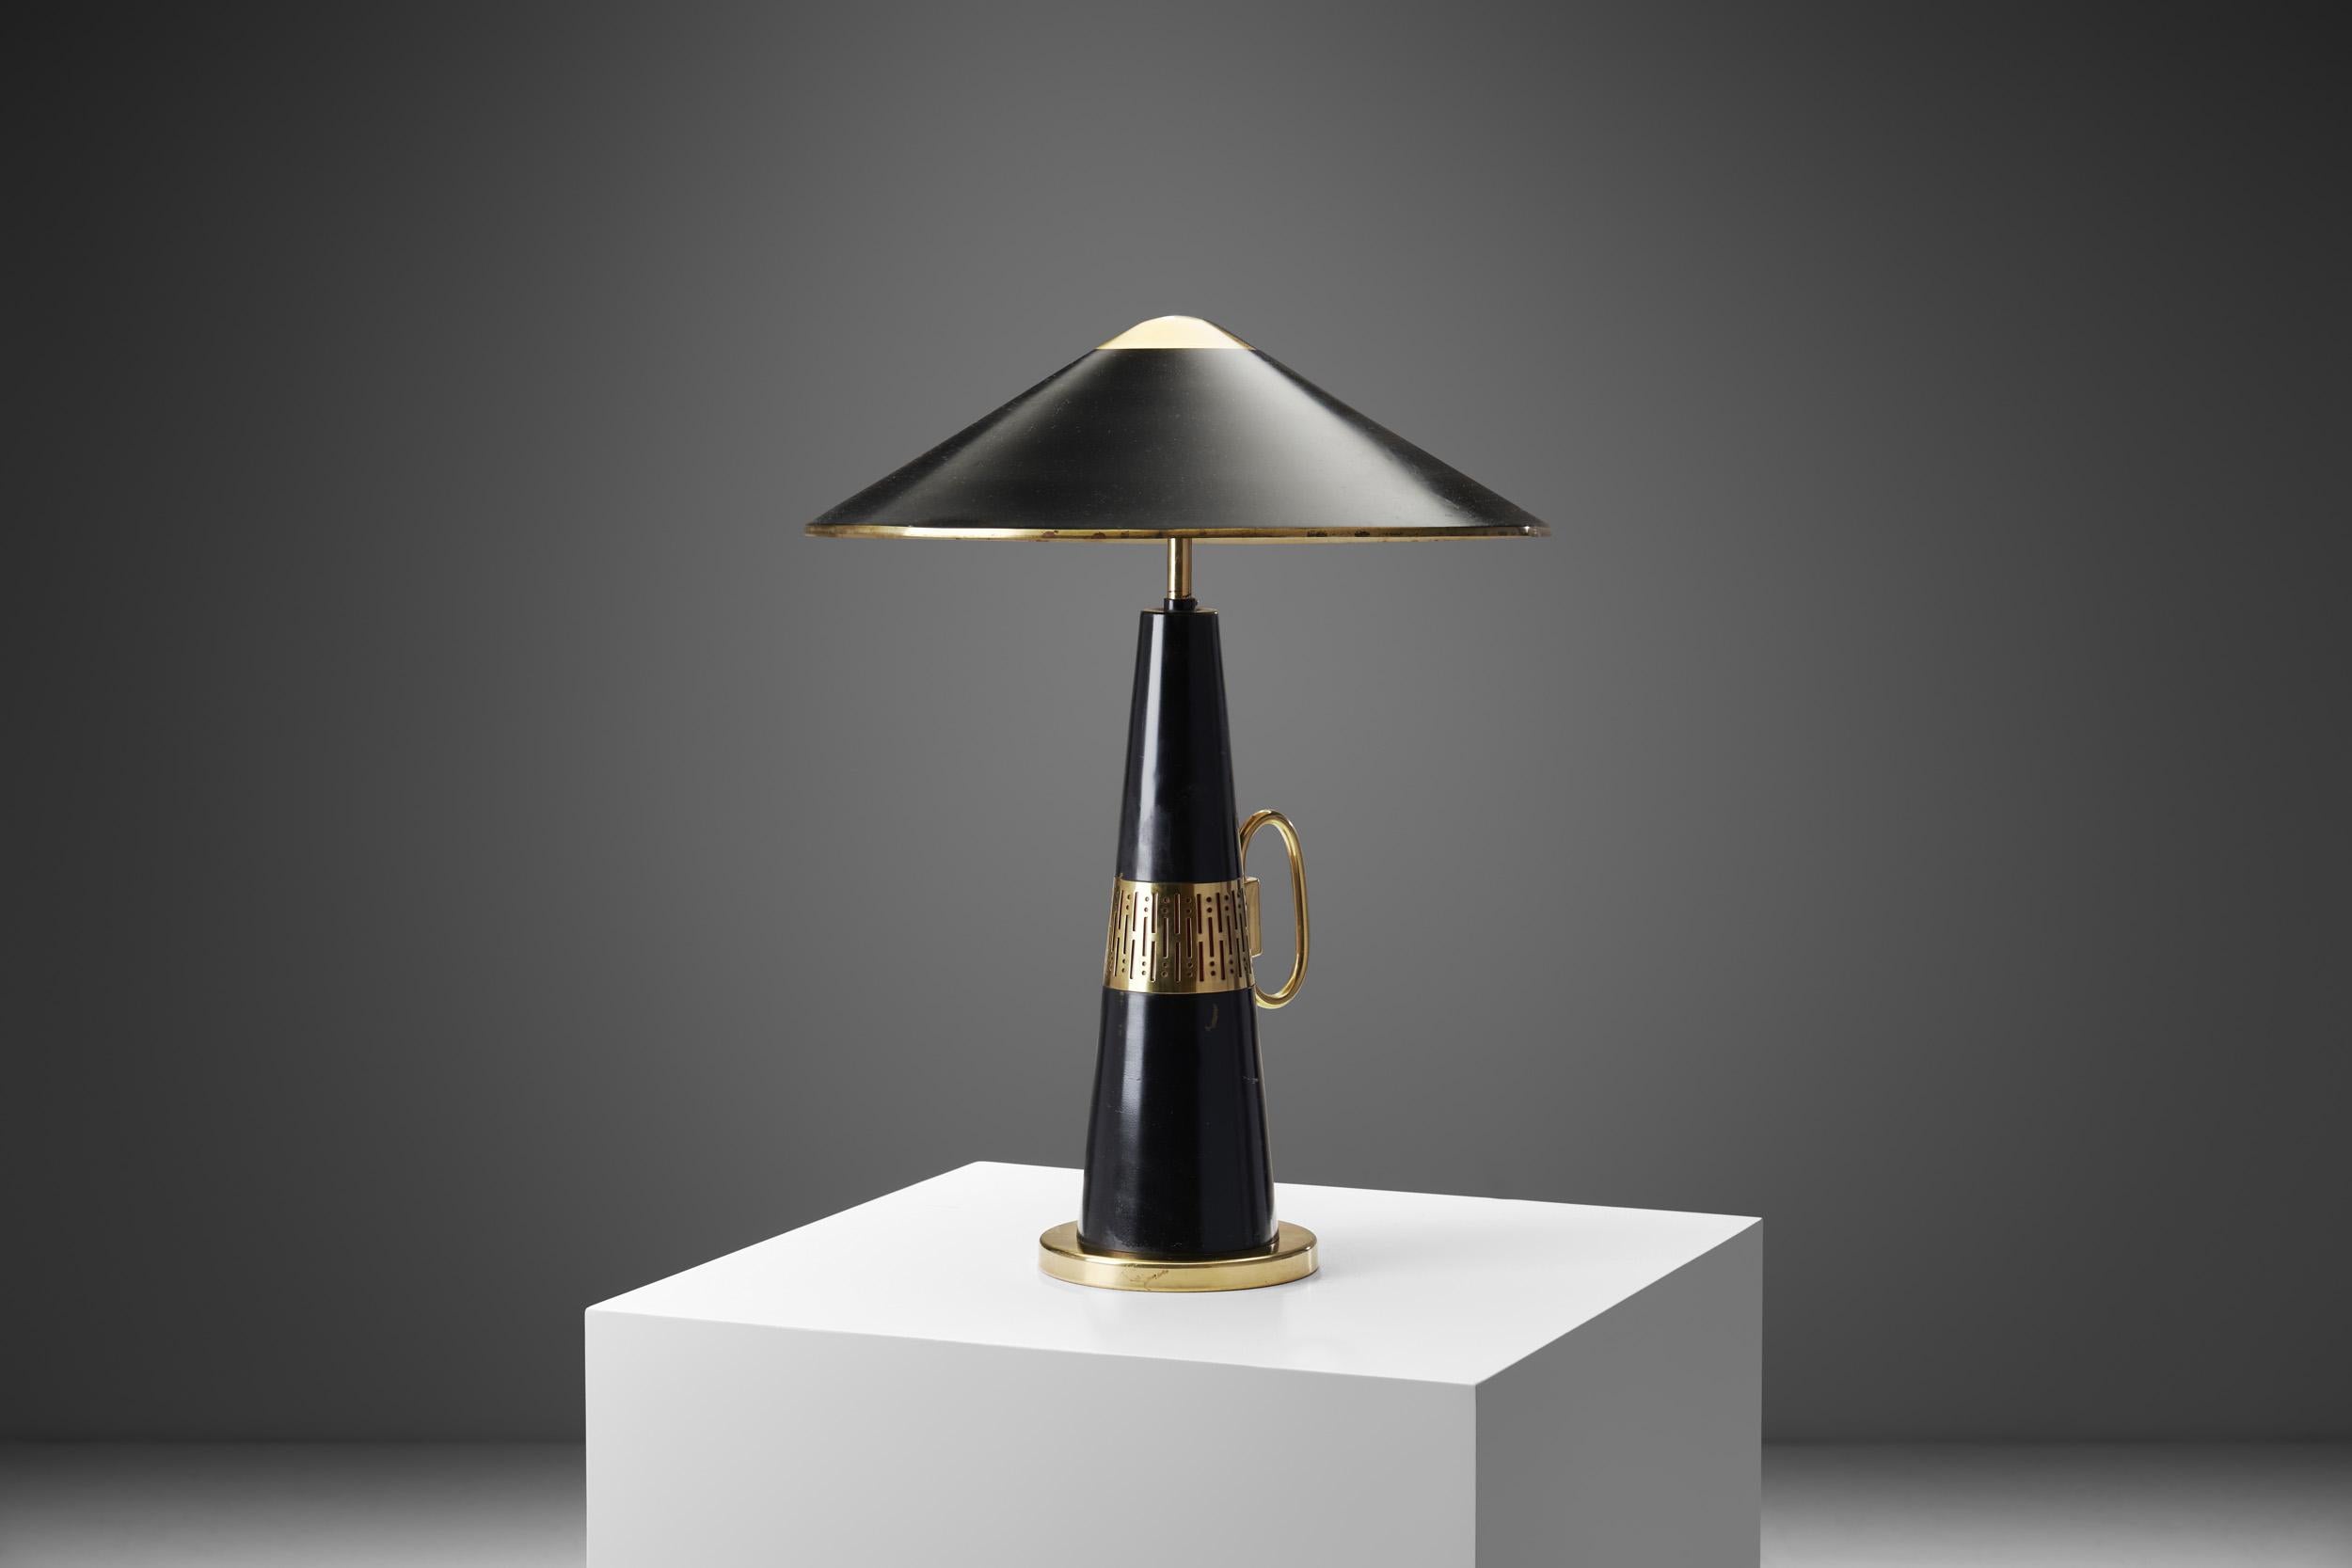 Svend Aage Holm Sørensen 'Attributed' Modell 8208 Lampe, Schweden, 1950er Jahre (Mitte des 20. Jahrhunderts) im Angebot